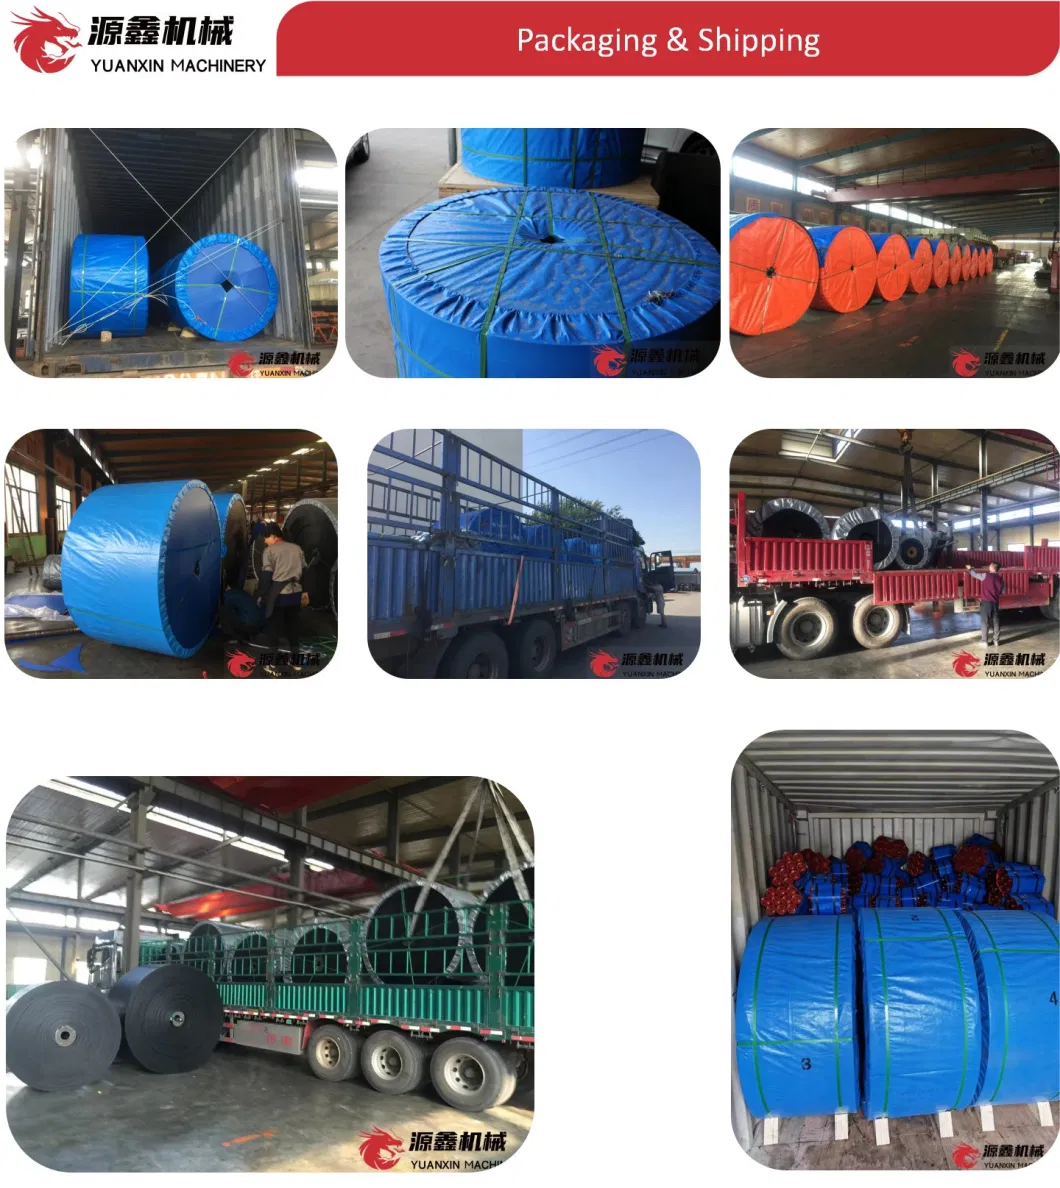 Large Capacity Conveyor Belt for Coal/Iron Ore Material Handling